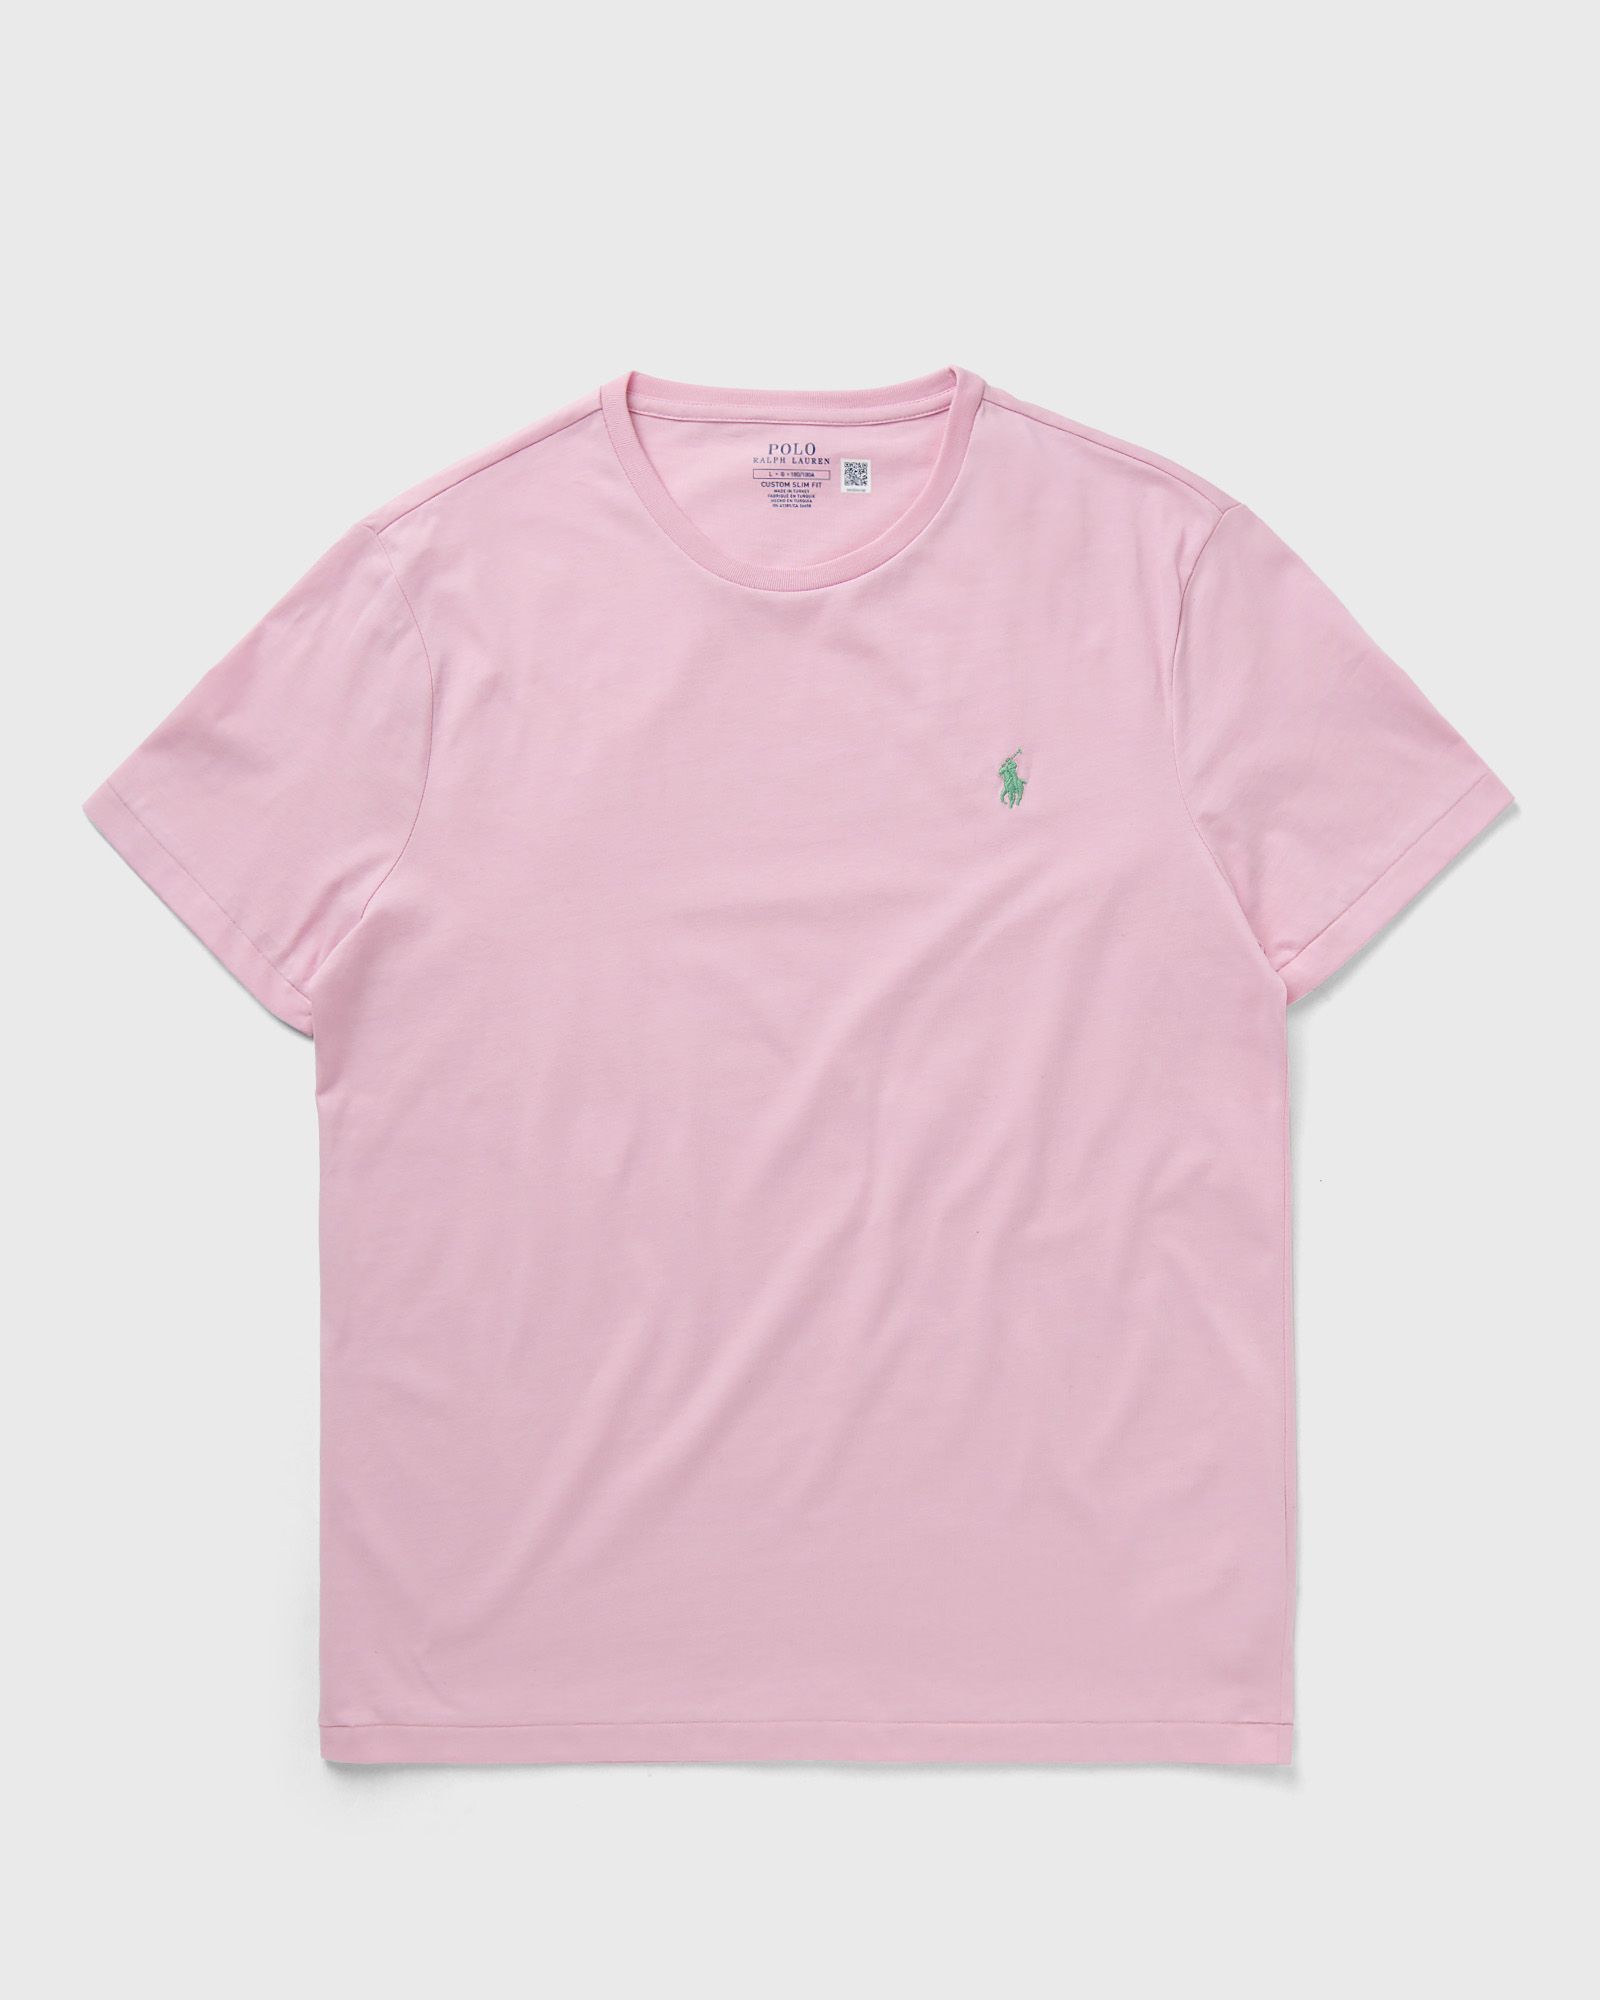 Polo Ralph Lauren - short sleeve-tee men shortsleeves pink in größe:xxl